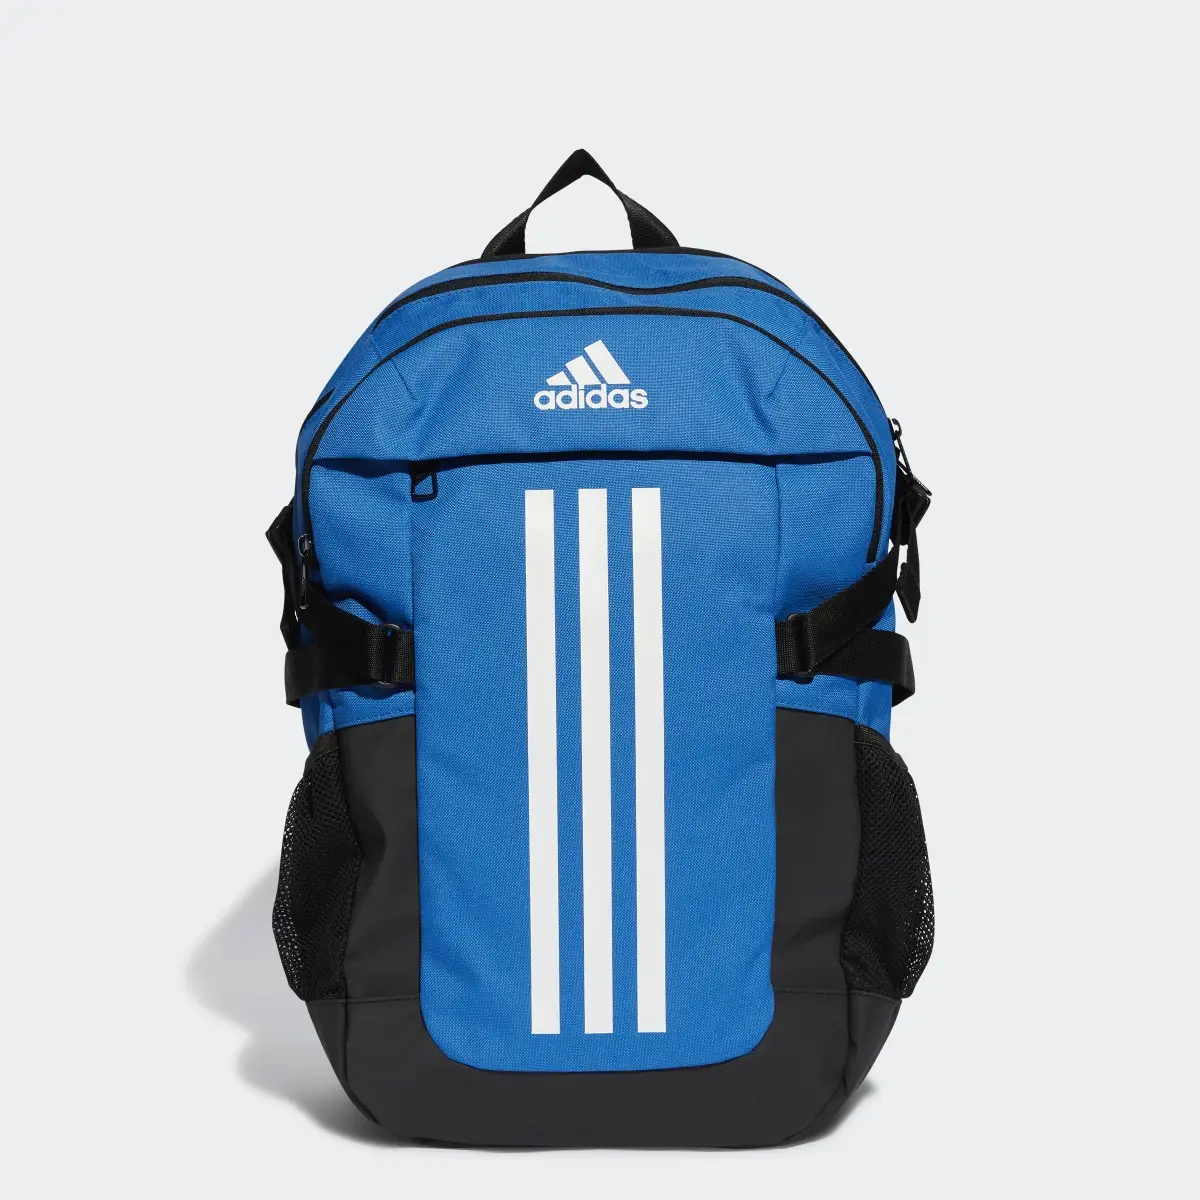 Adidas Power VI Backpack. 1